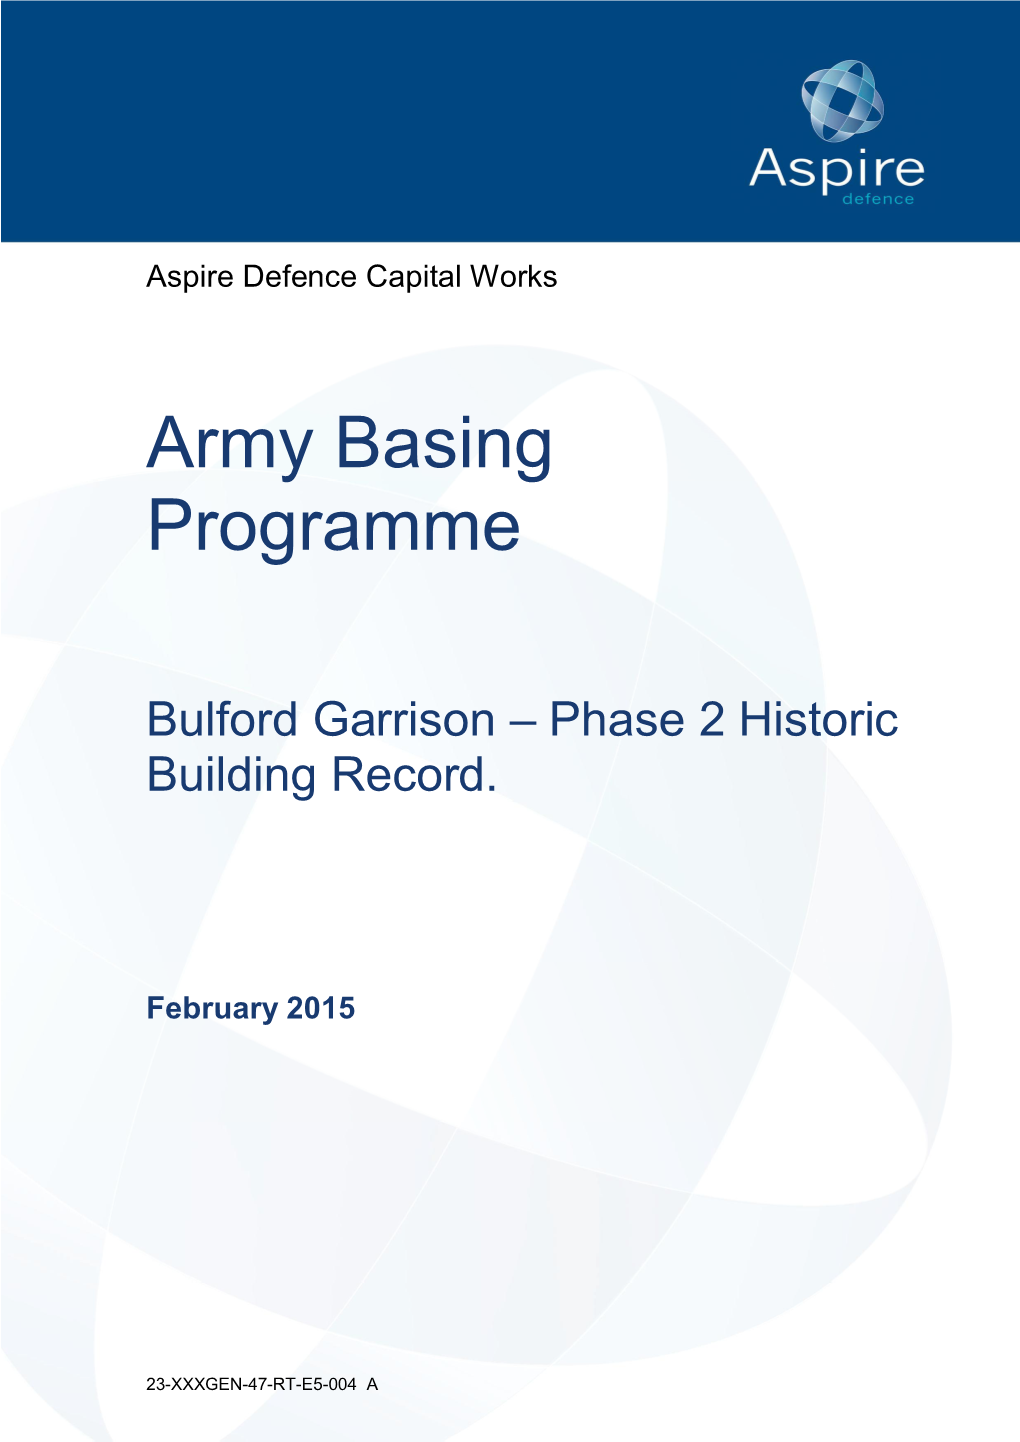 Army Basing Programme